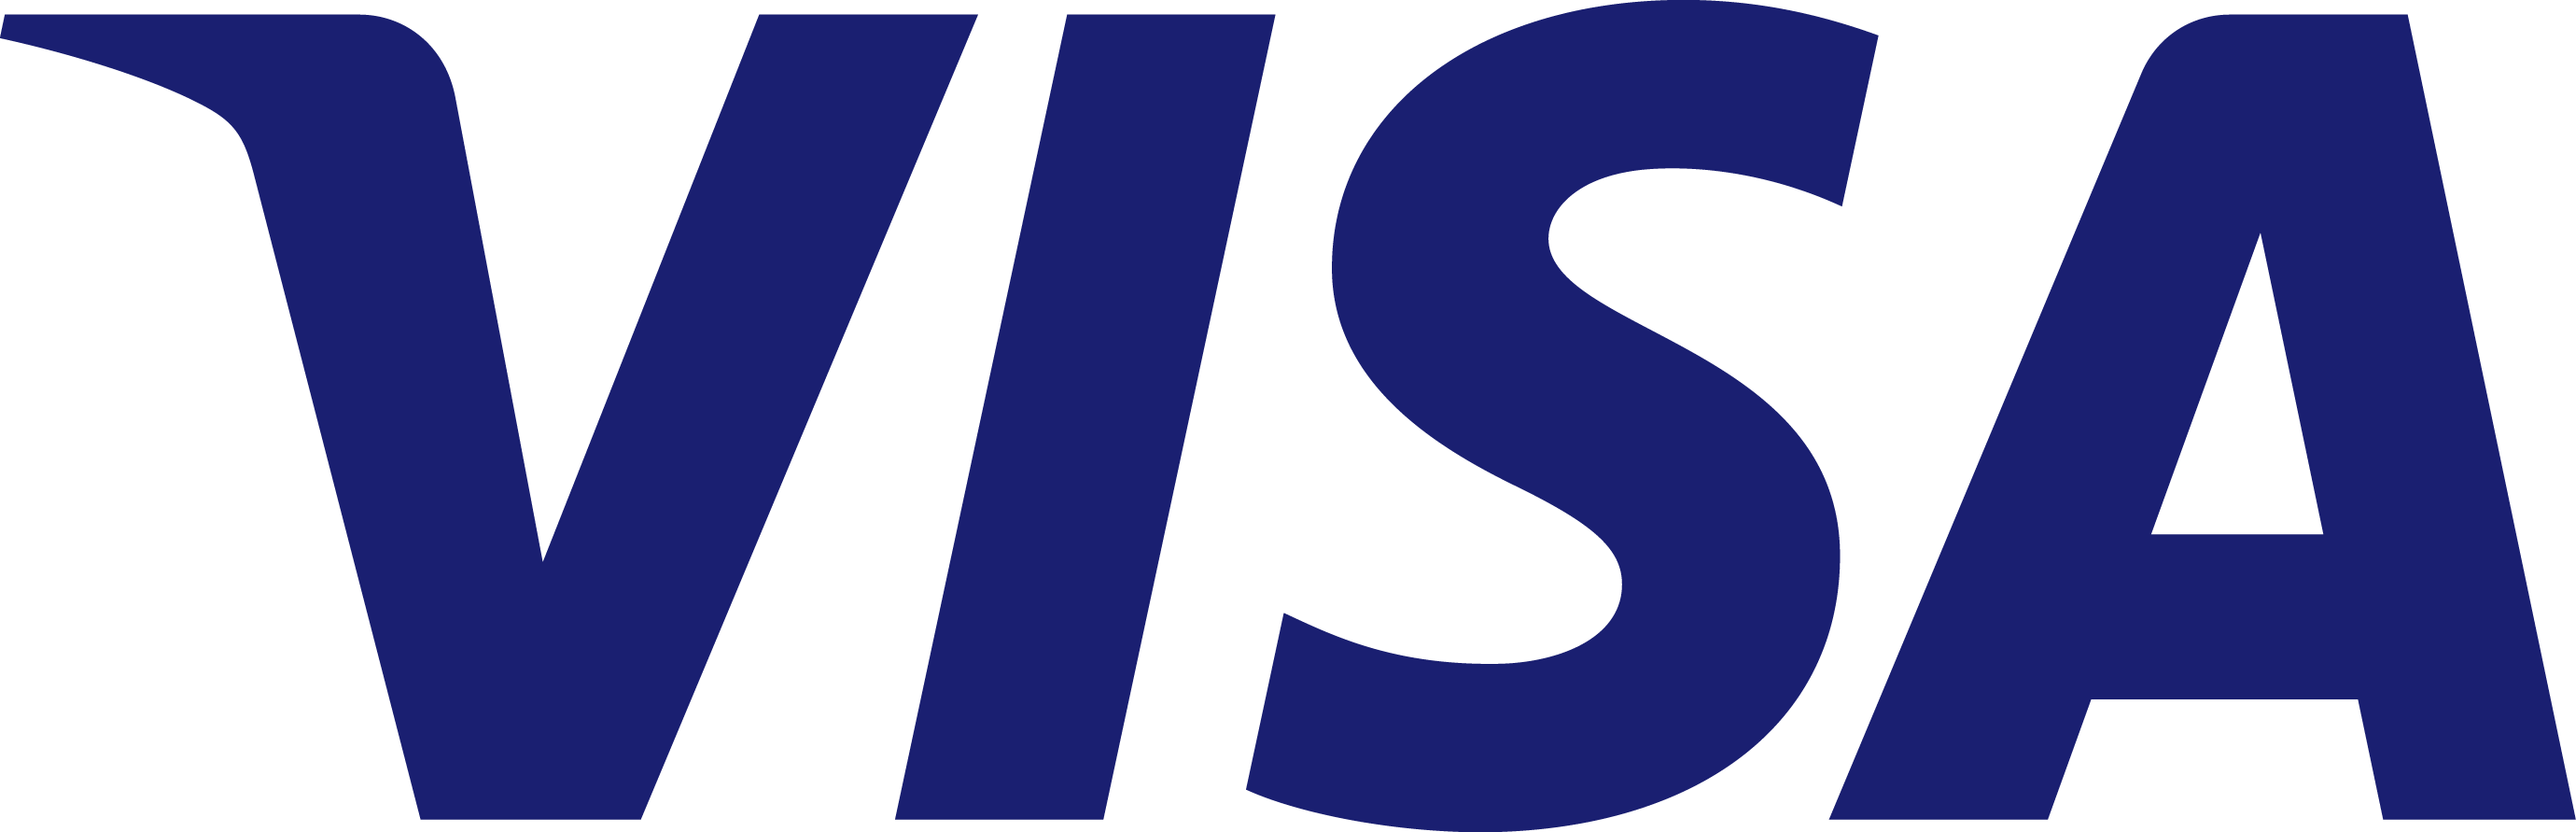 Visa Card Logo png